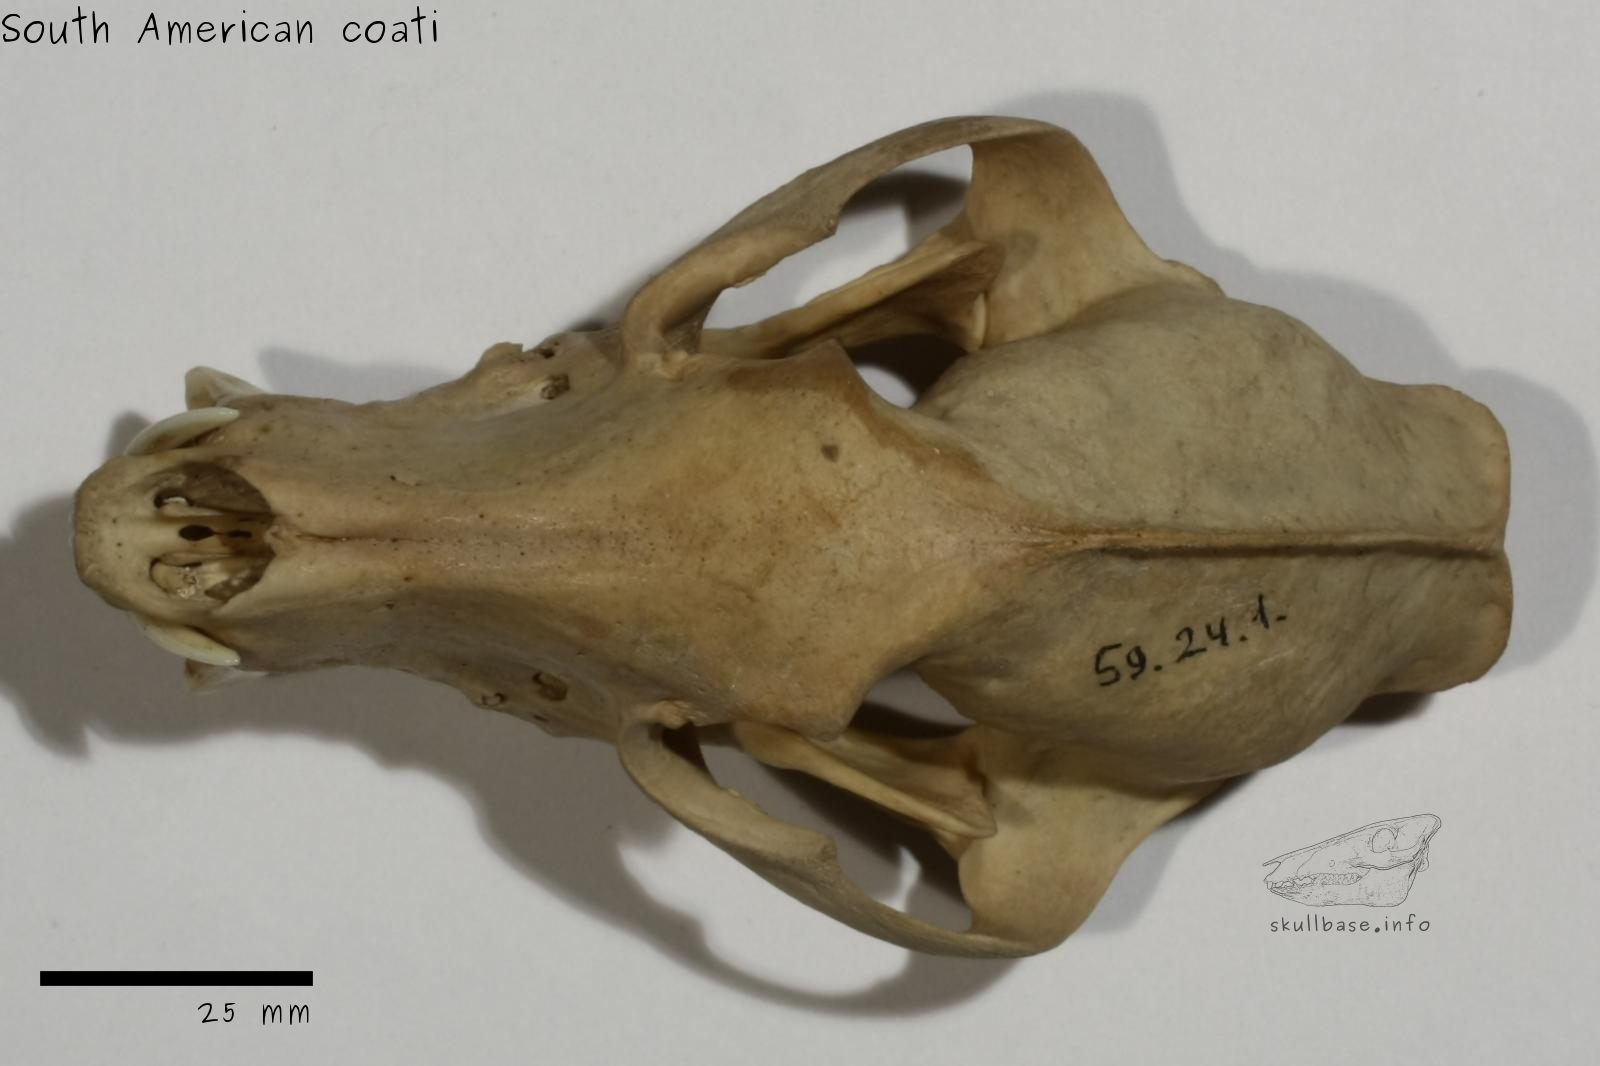 South American coati (Nasua nasua) skull dorsal view